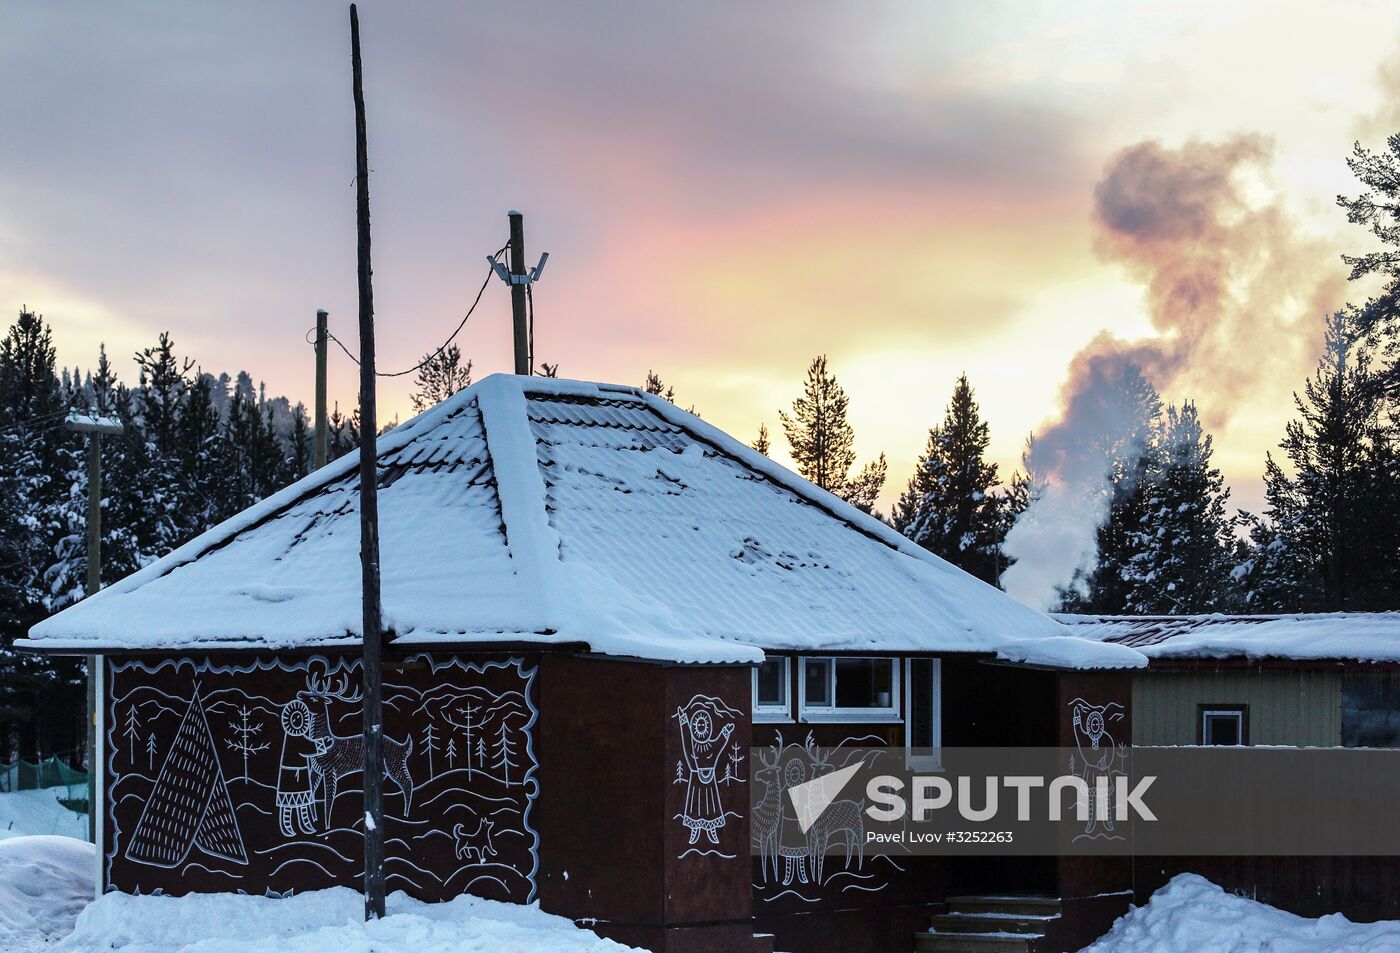 Saami village of Sam-Syit in Murmansk Region